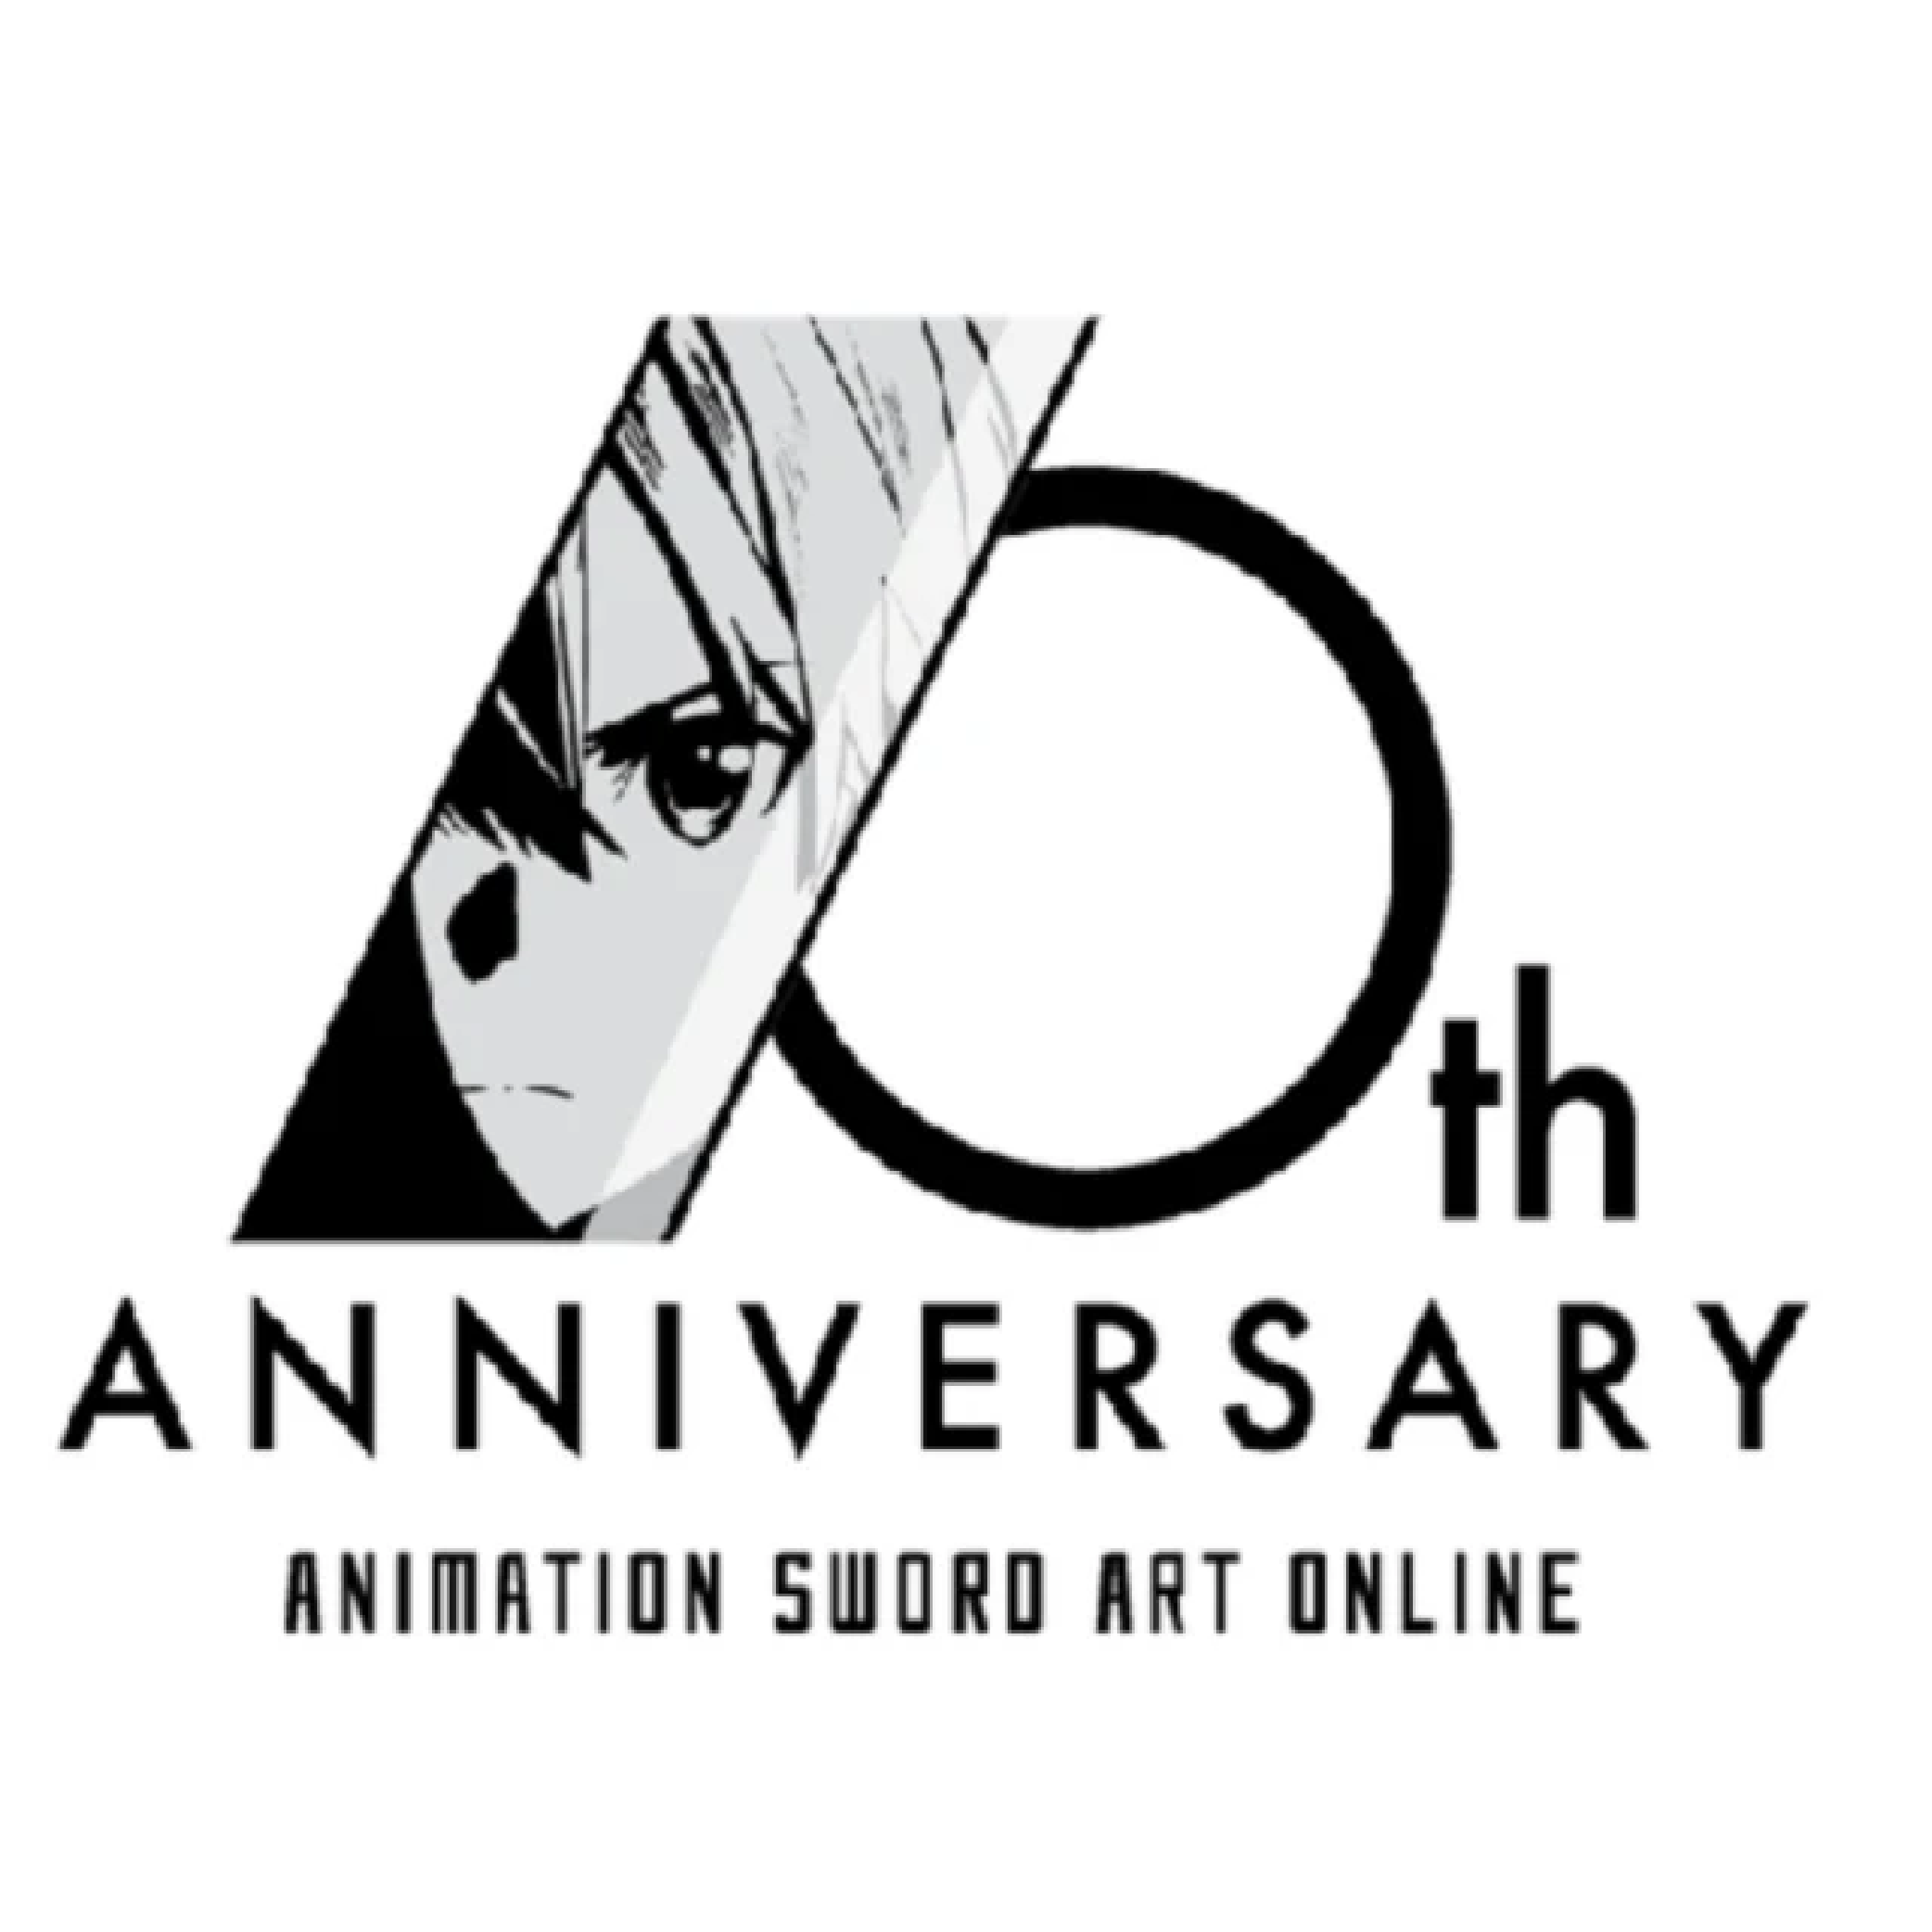 Sword Art Online 10th Anniversary Booster Box